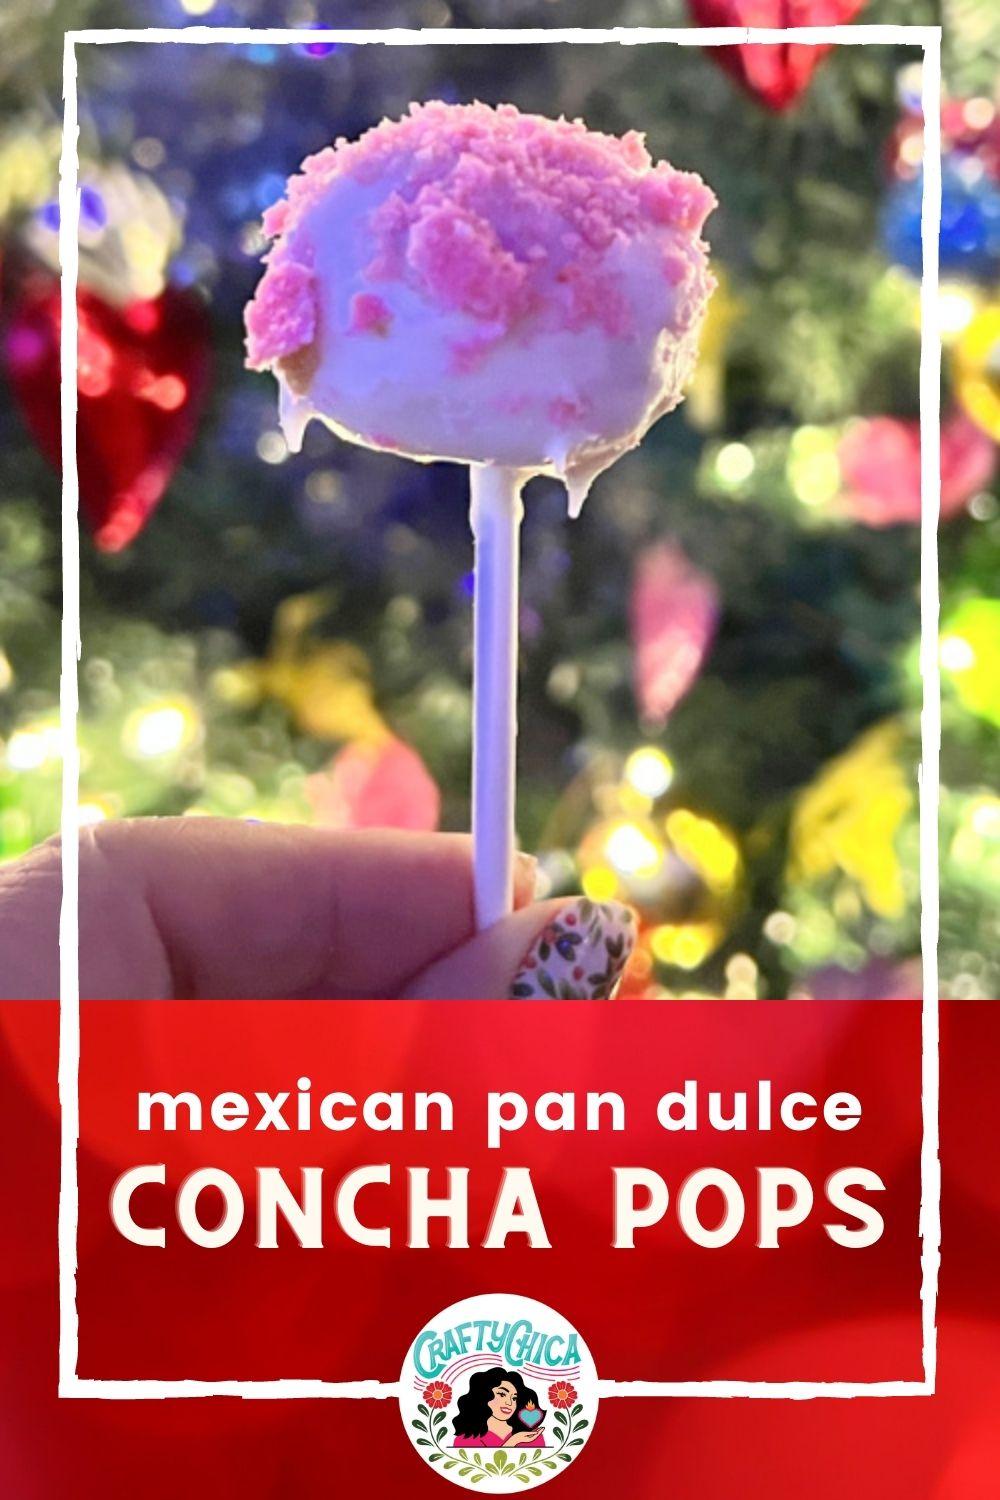 Concha pops!